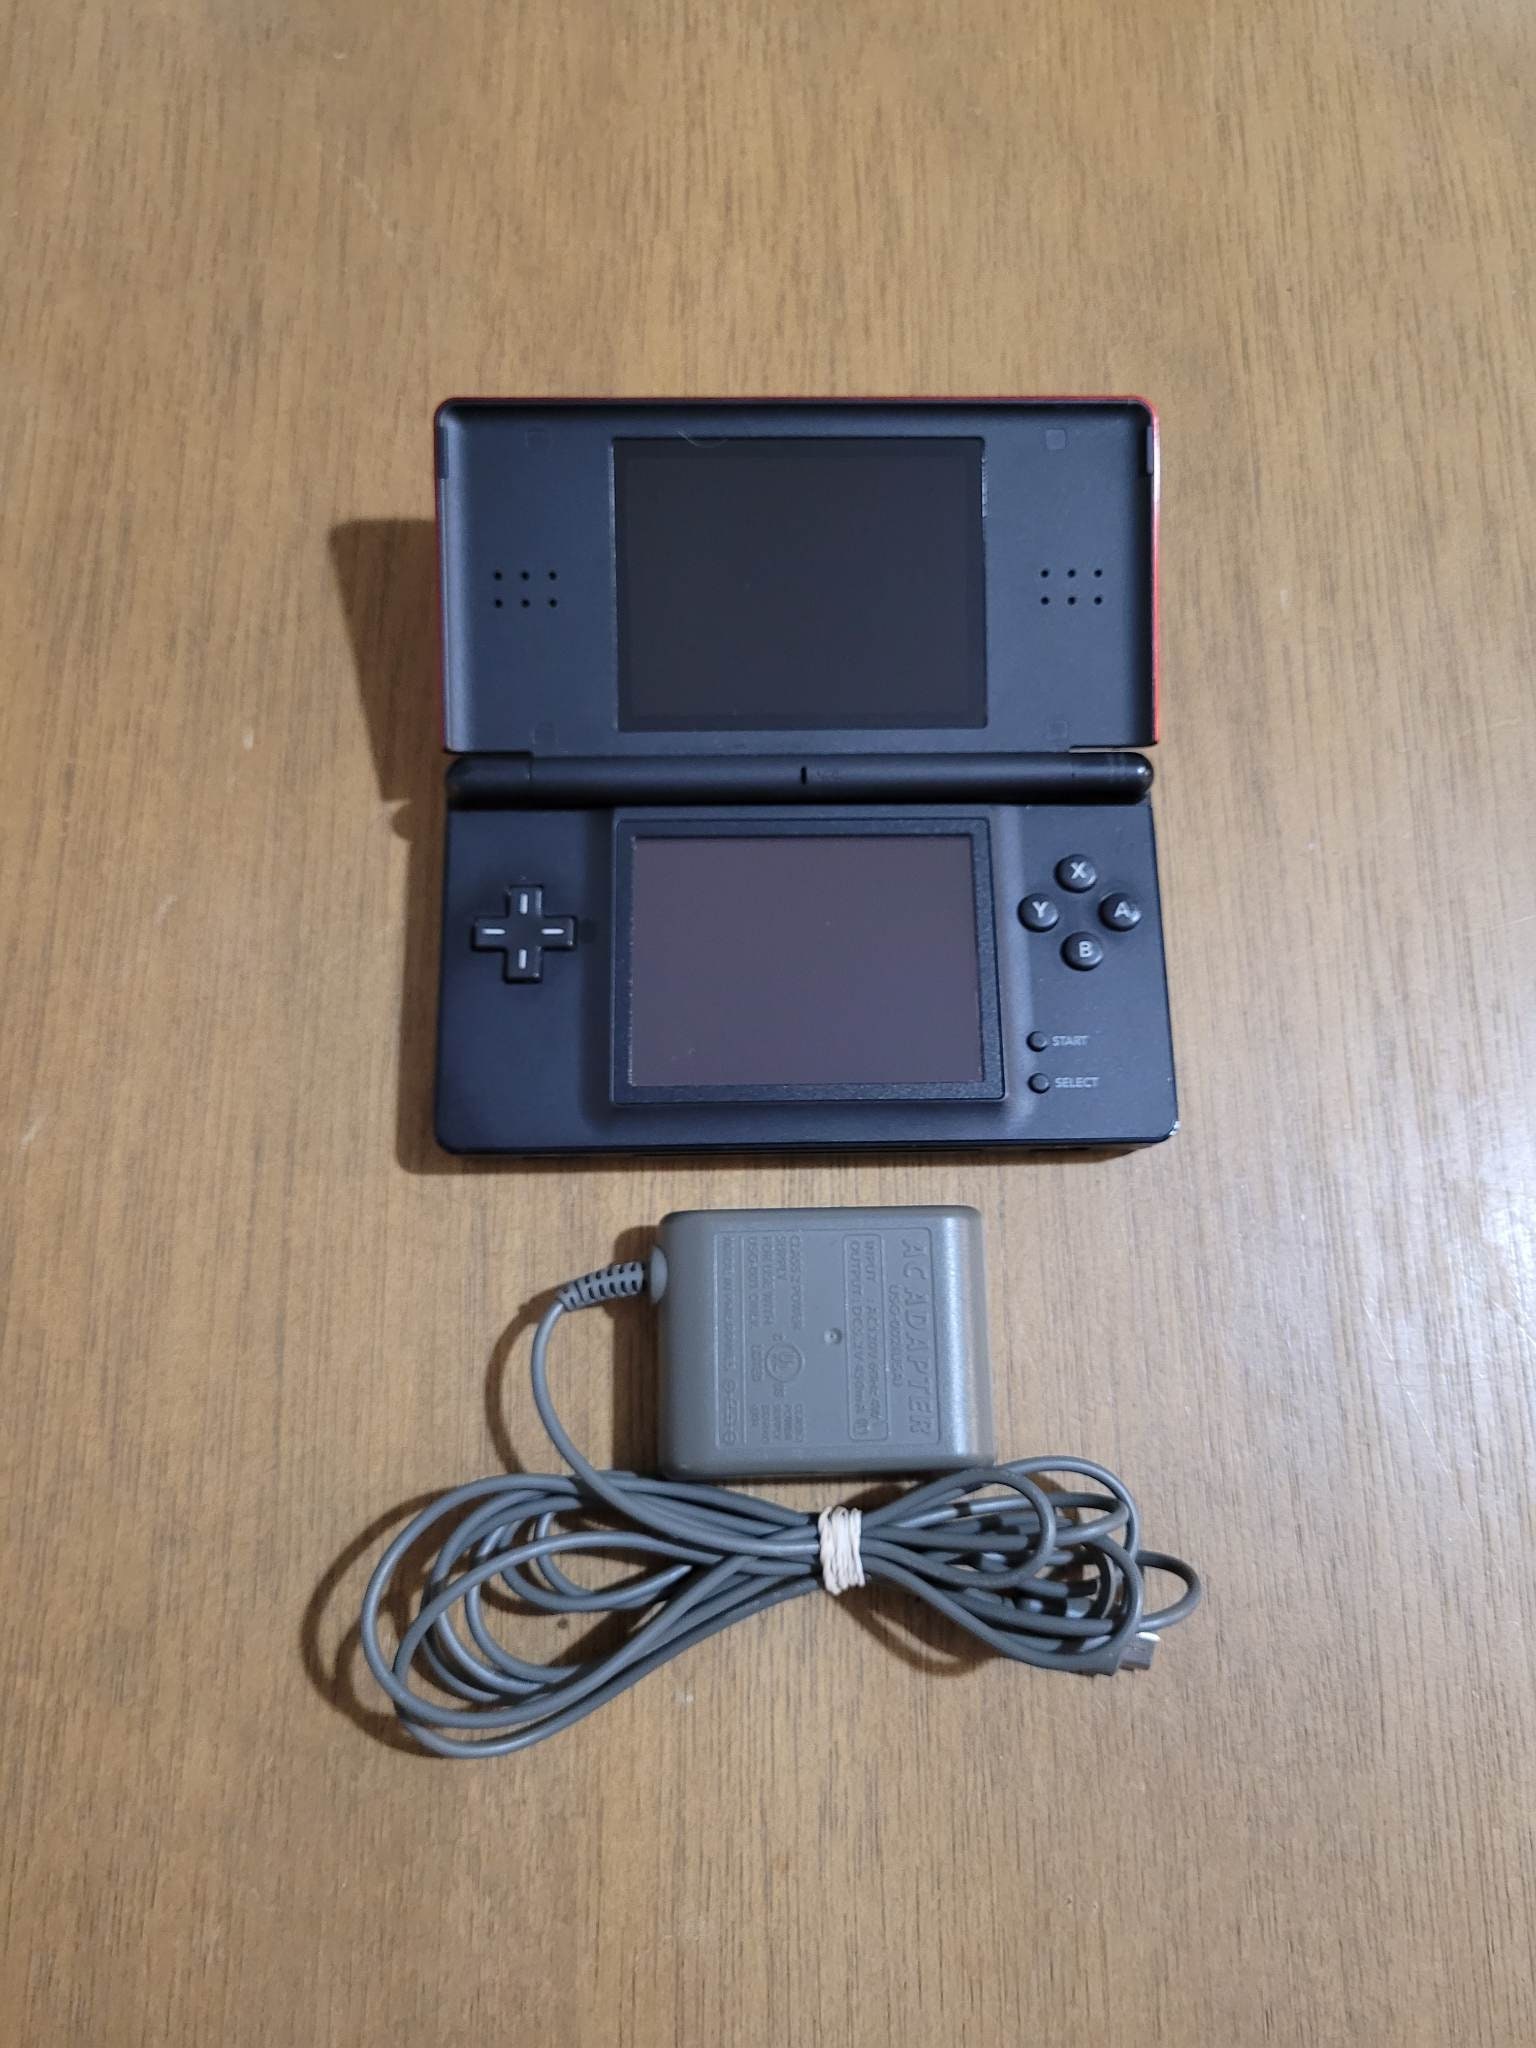 Original Nintendo dsi classic handheld game console ndsi contains